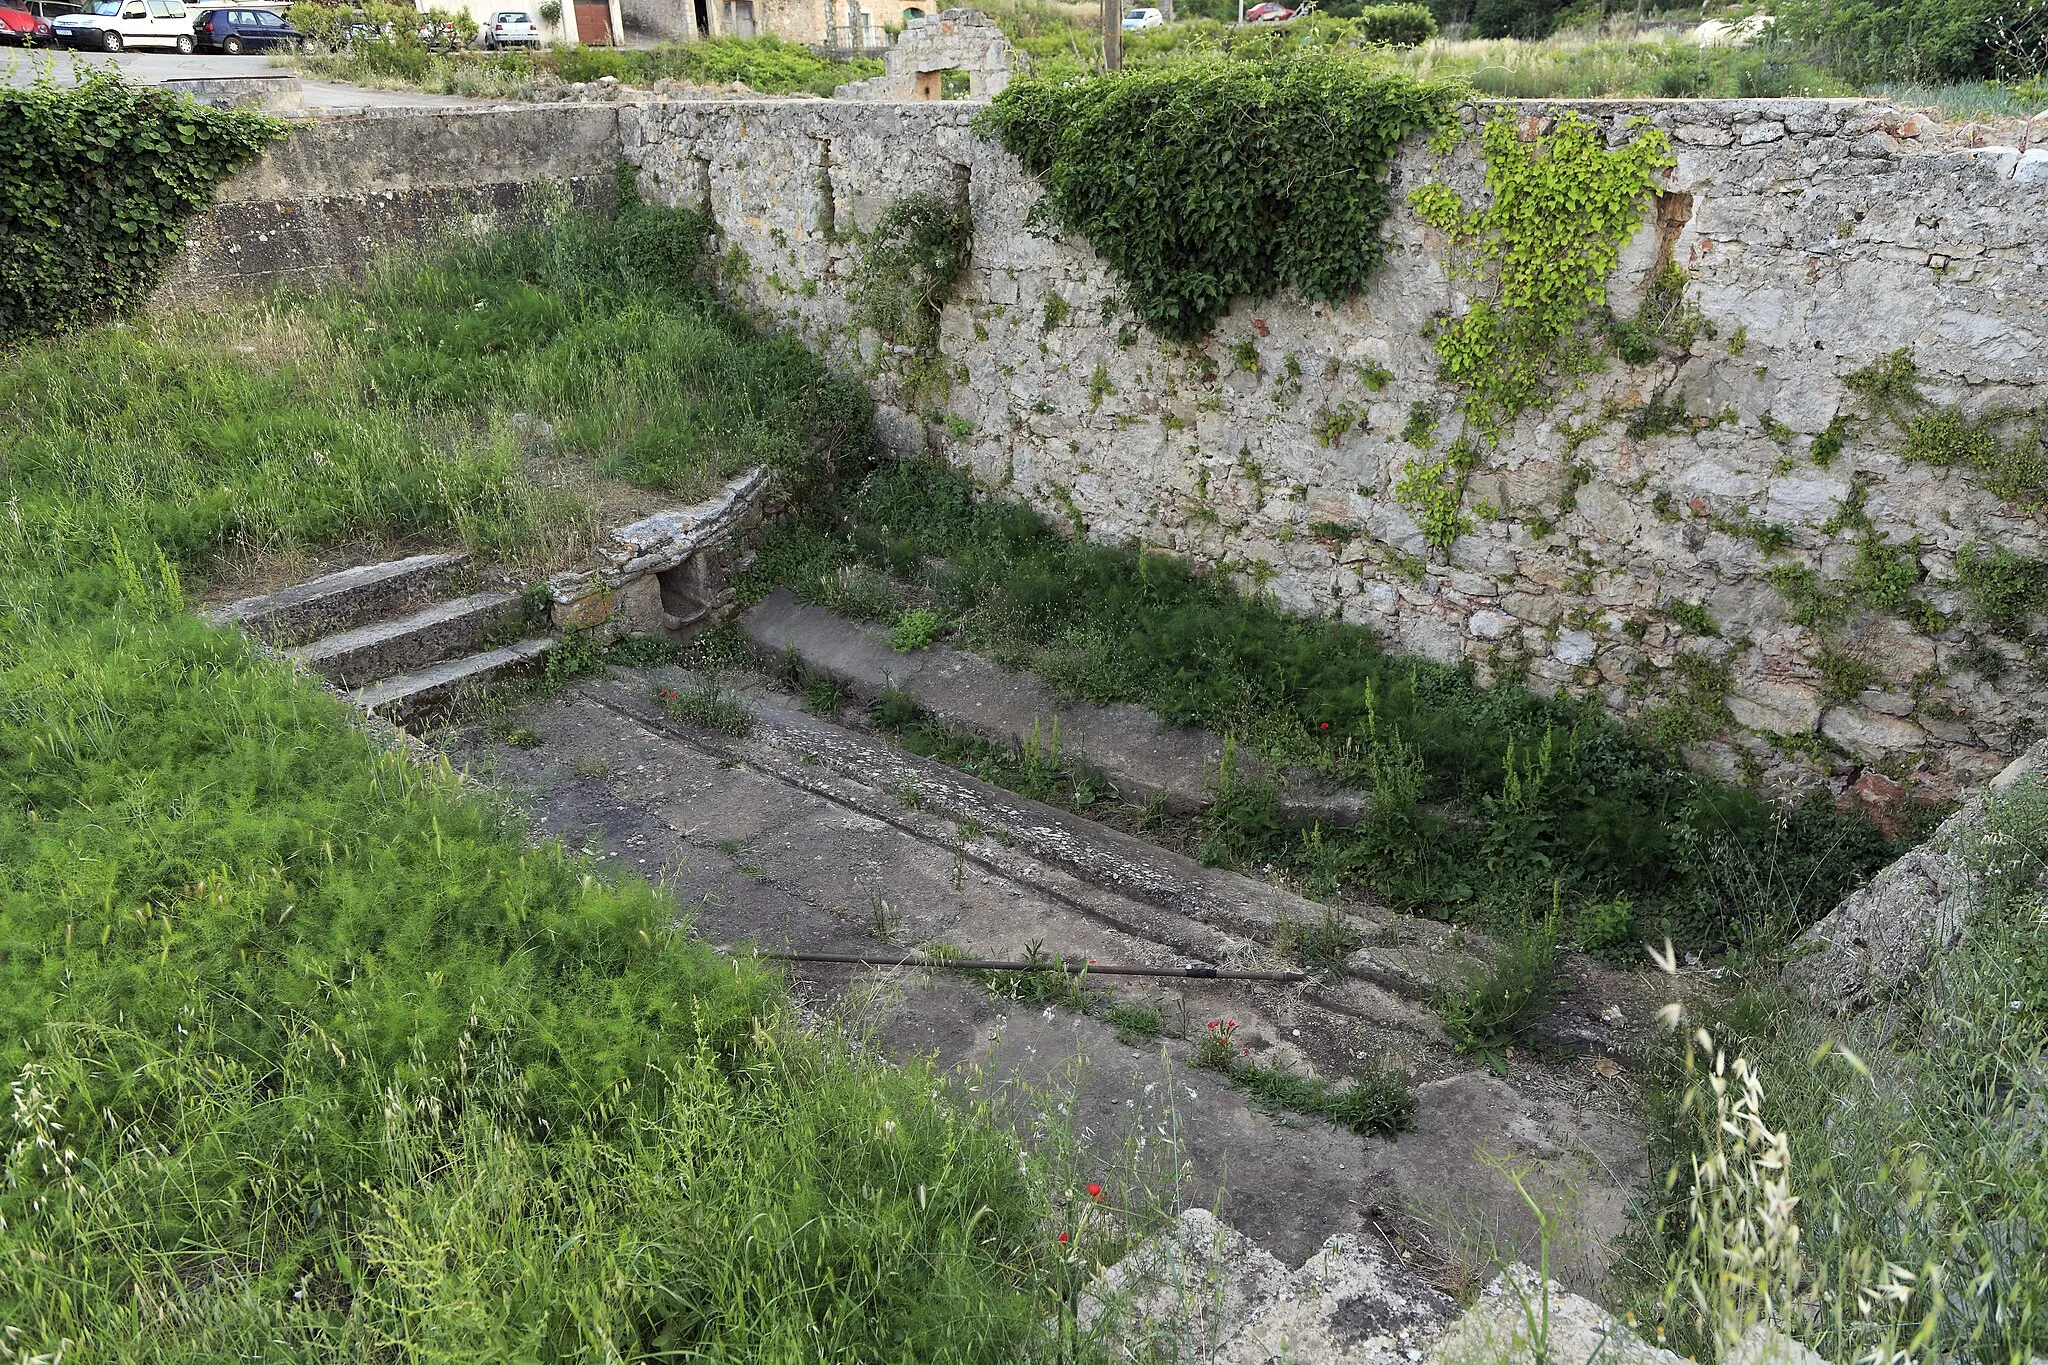 Photo showing: An der Haarnadelkurve am Ortseingang aus Richtung Stari Grad, das Wasserbecken liegt allerdings trocken.